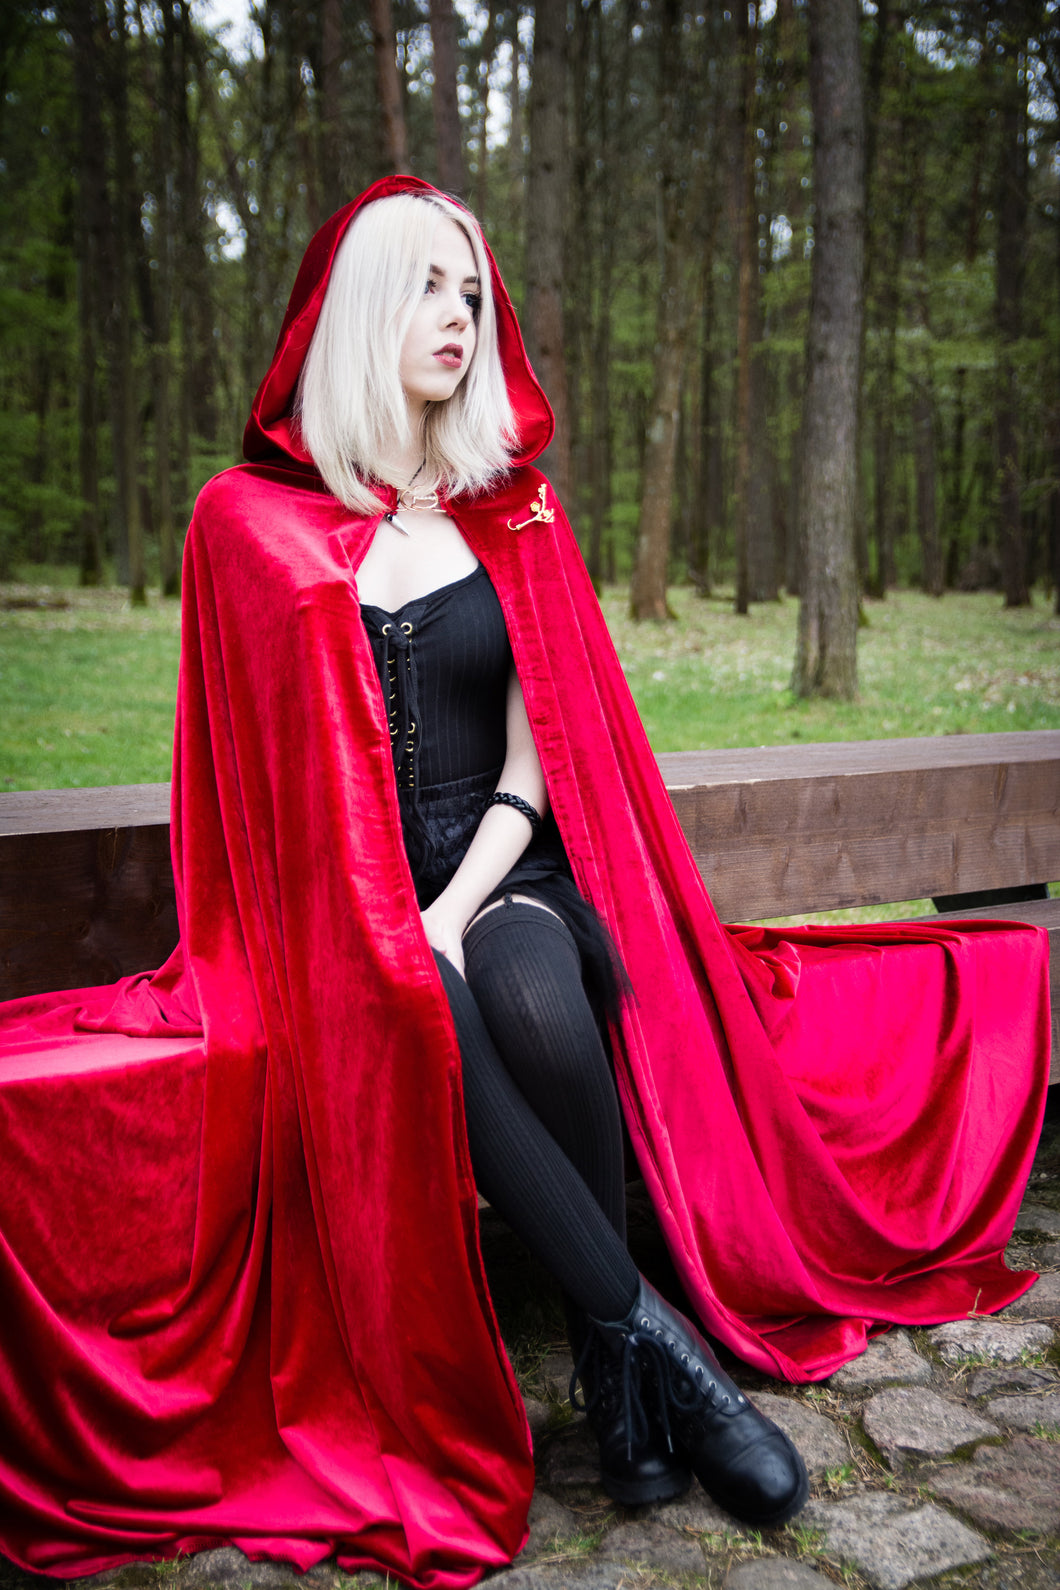 Hooded Cloak Fantasy Cloak Hooded Cape Red Riding Hood Medieval Cloak Red Cloak Bridal Cape